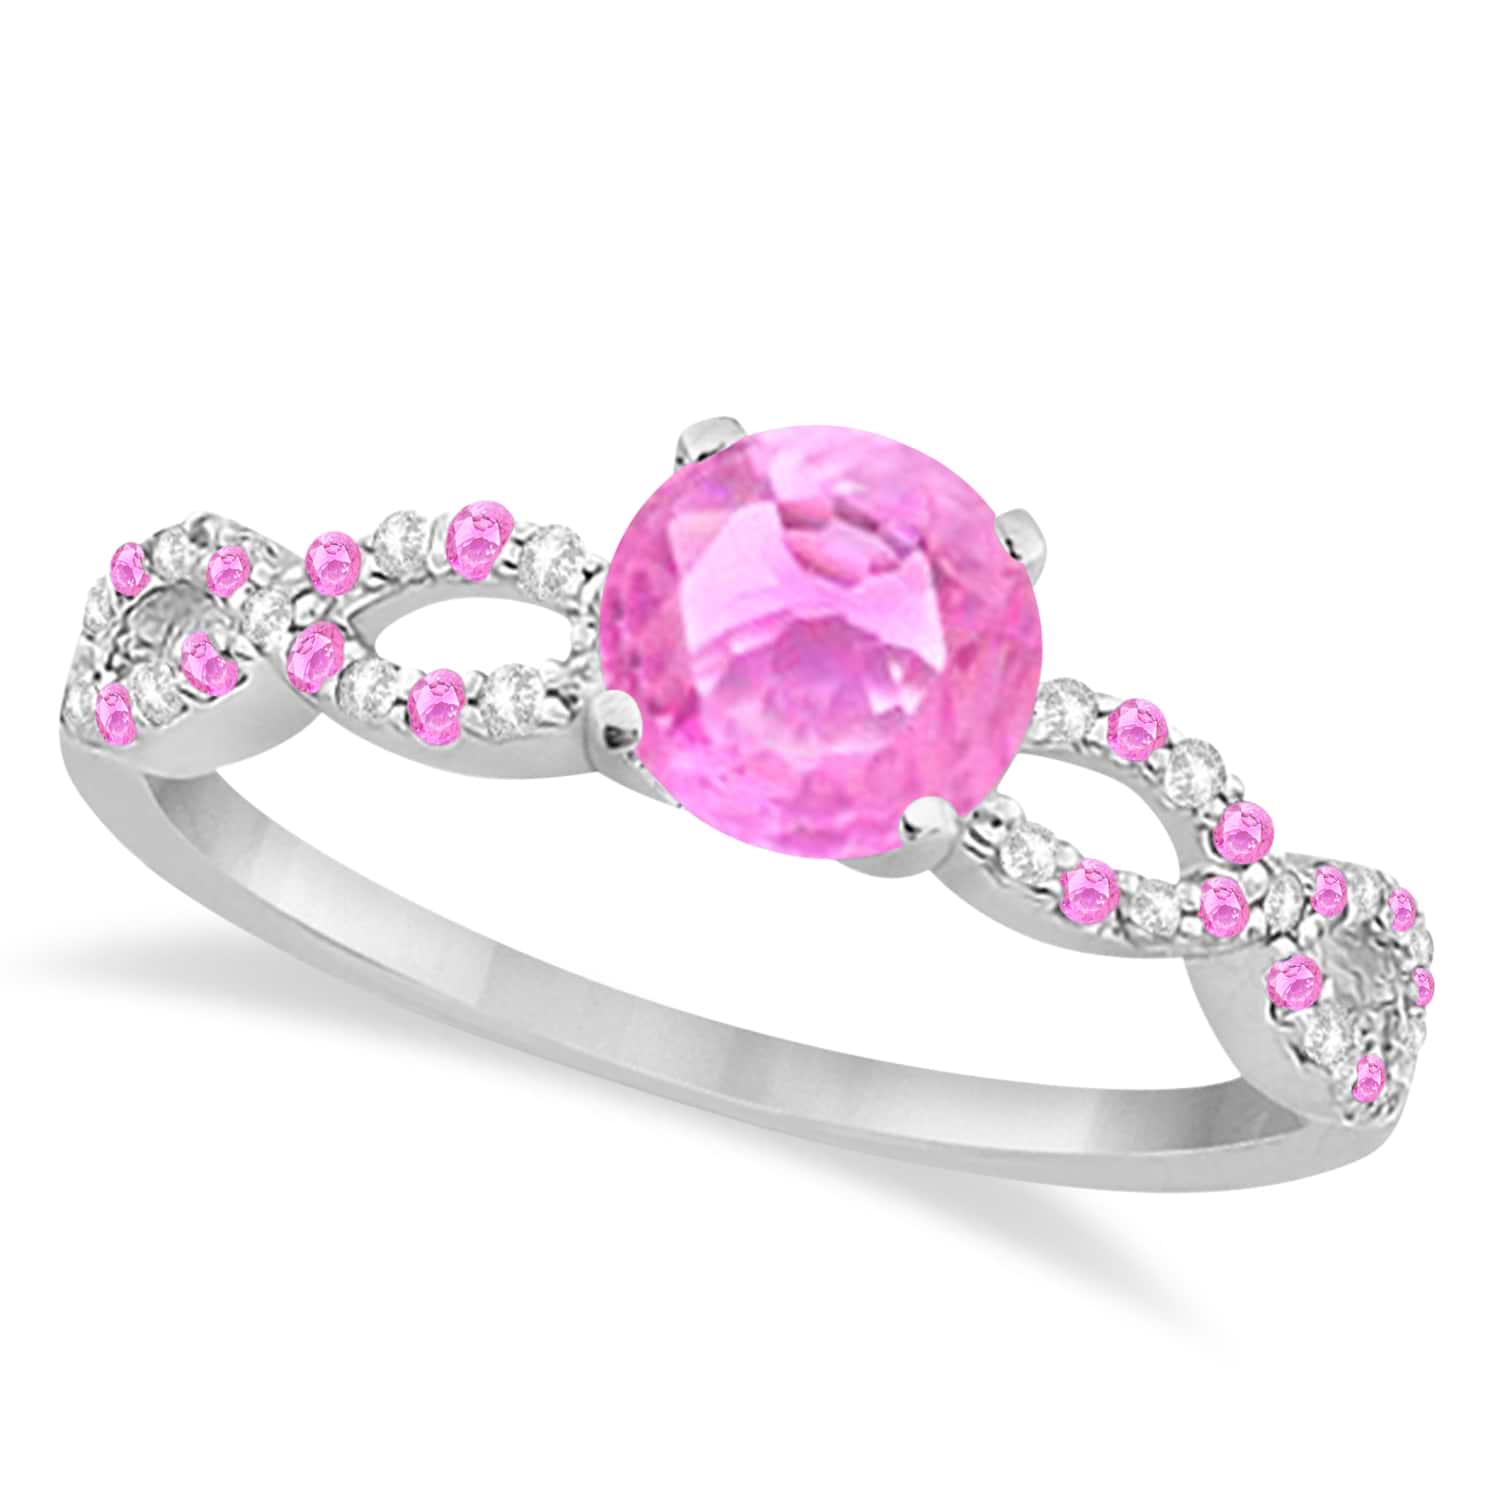 Infinity Diamond & Pink Sapphire Engagement Ring Platinum 1.05ct